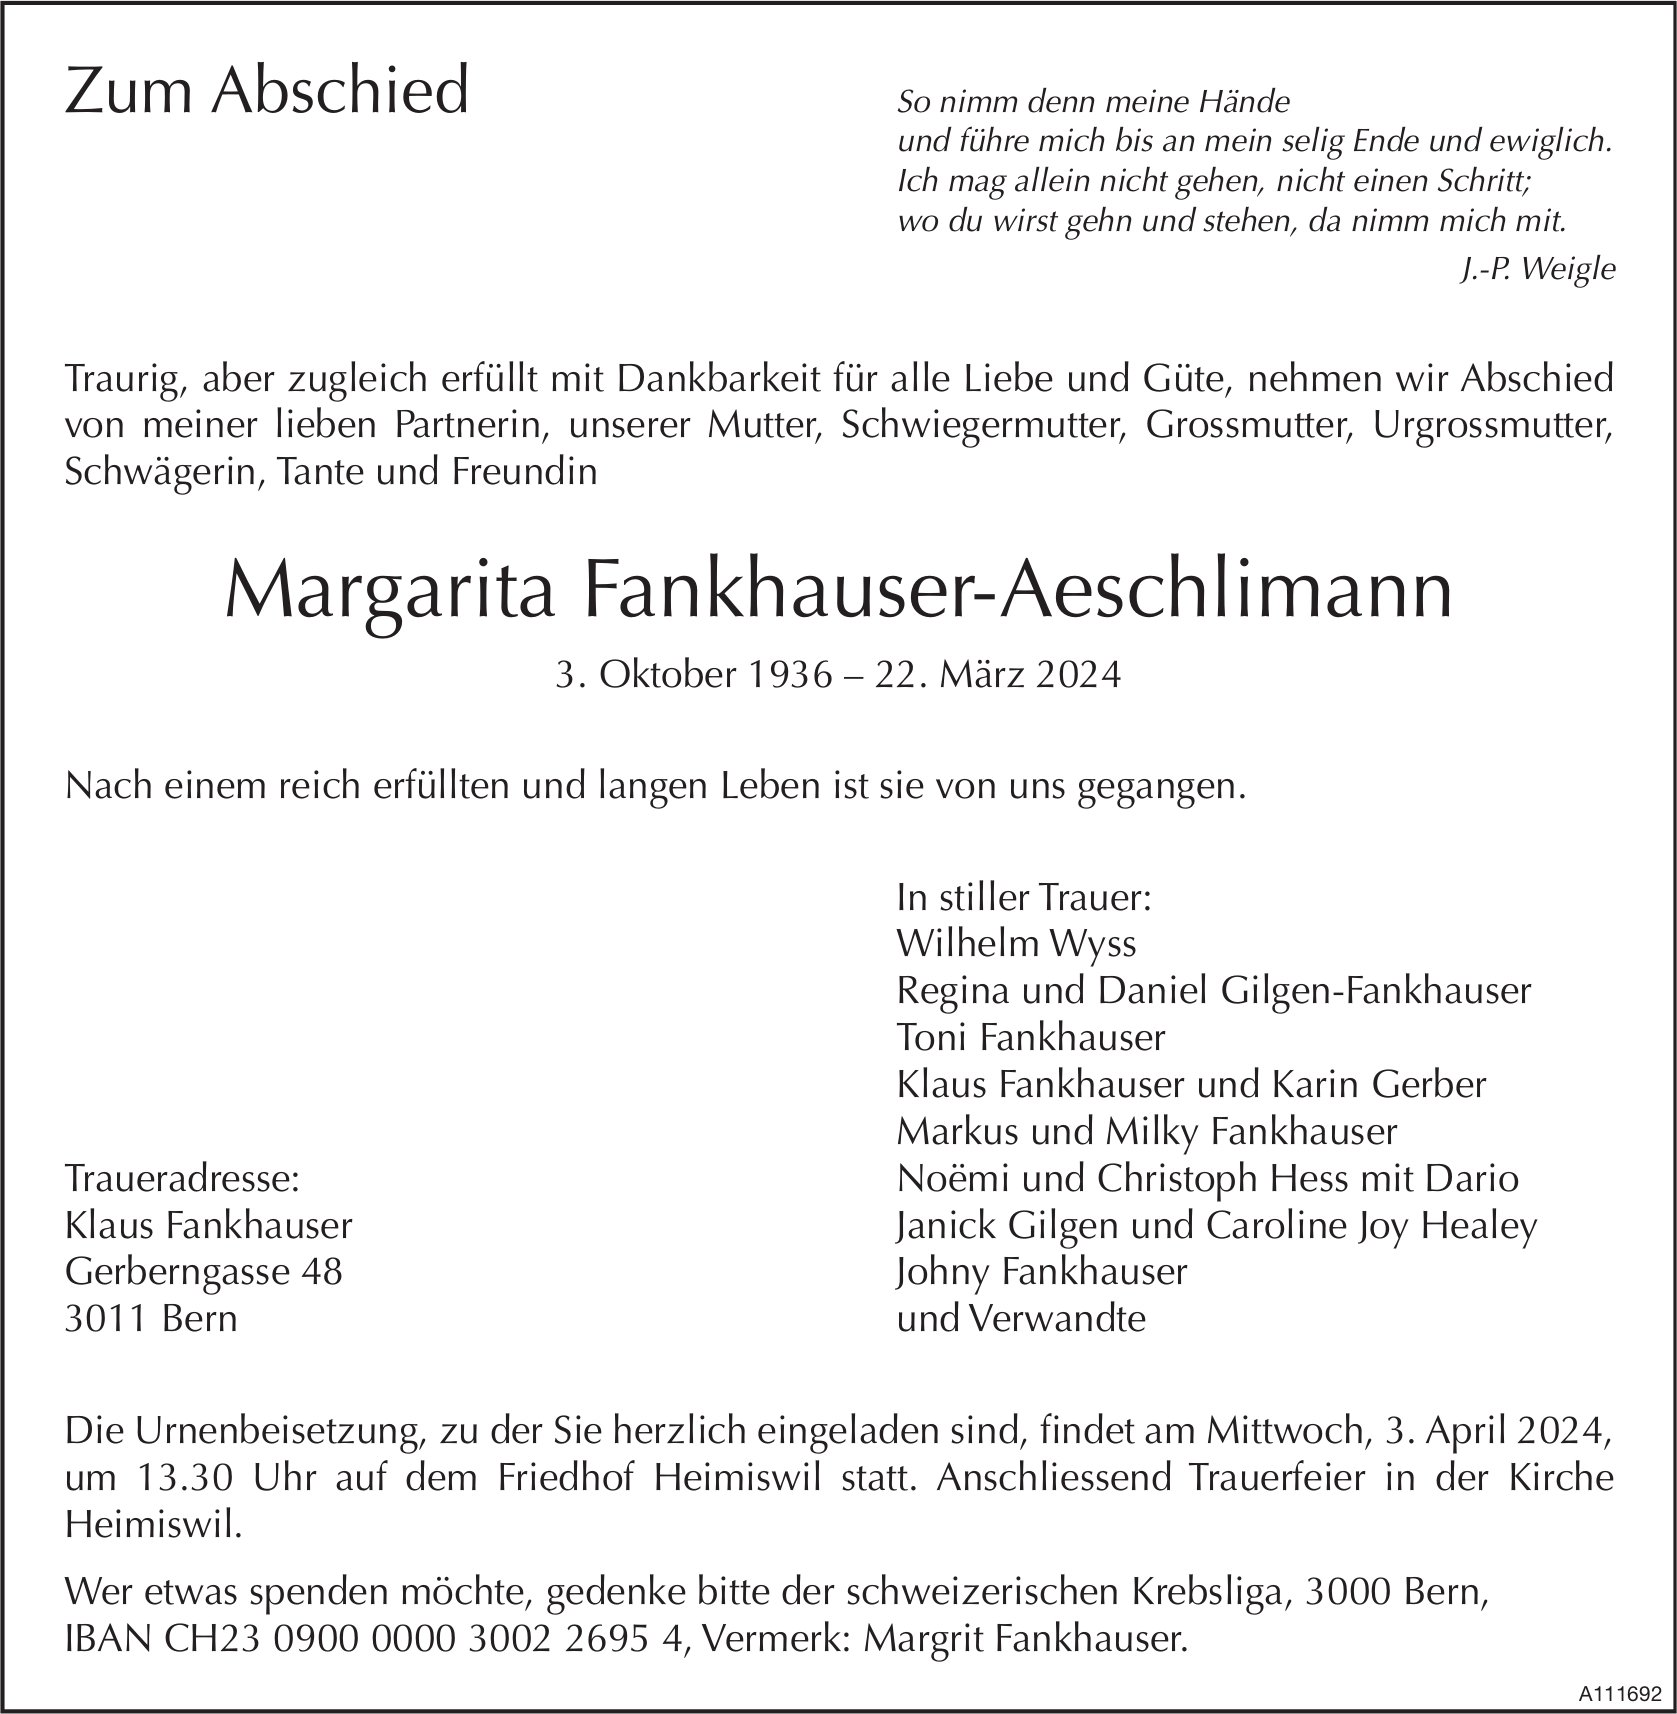 Margarita Fankhauser-Aeschlimann, März 2024 / TA